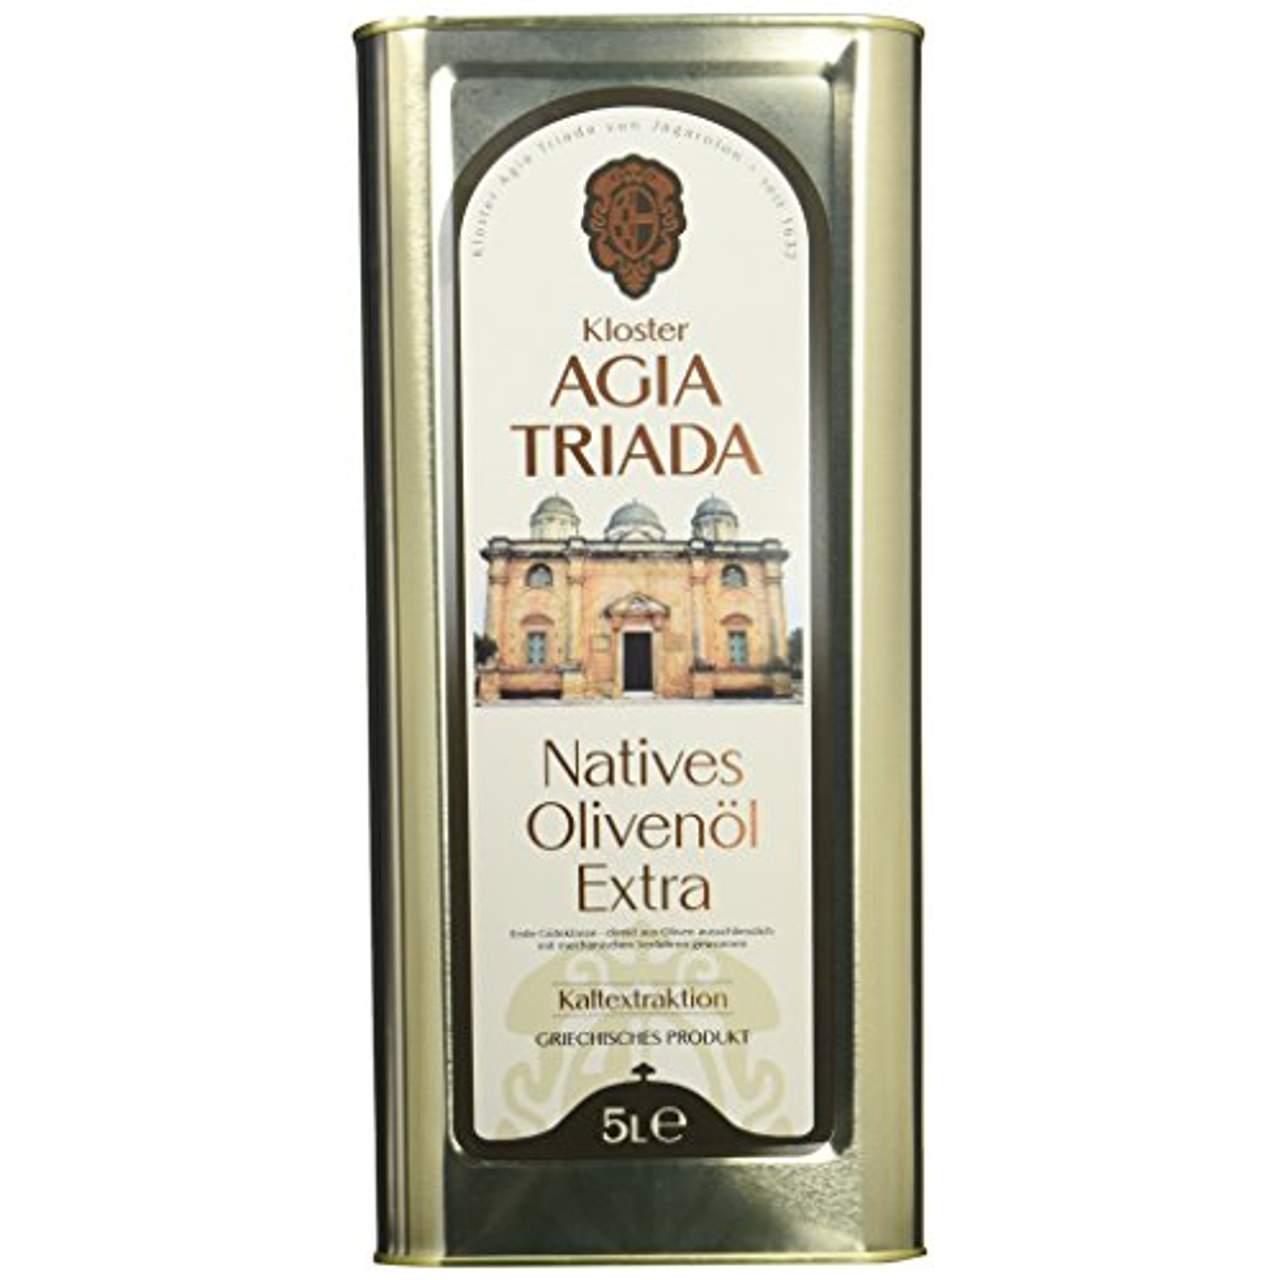 Agia Triada extra natives Olivenöl